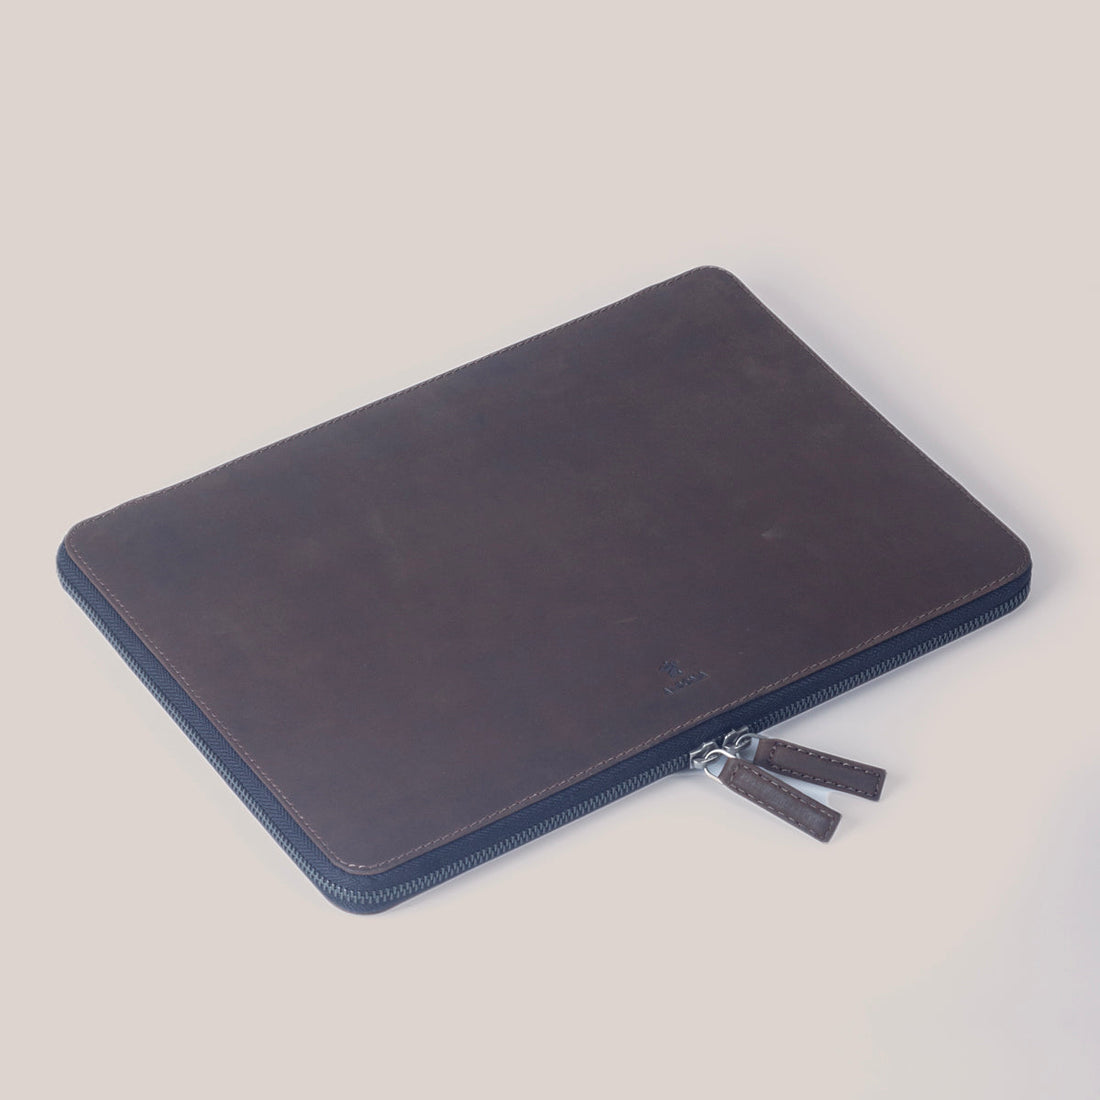 Microsoft Surface Book 15 Zippered Laptop Case - Vintage Tan